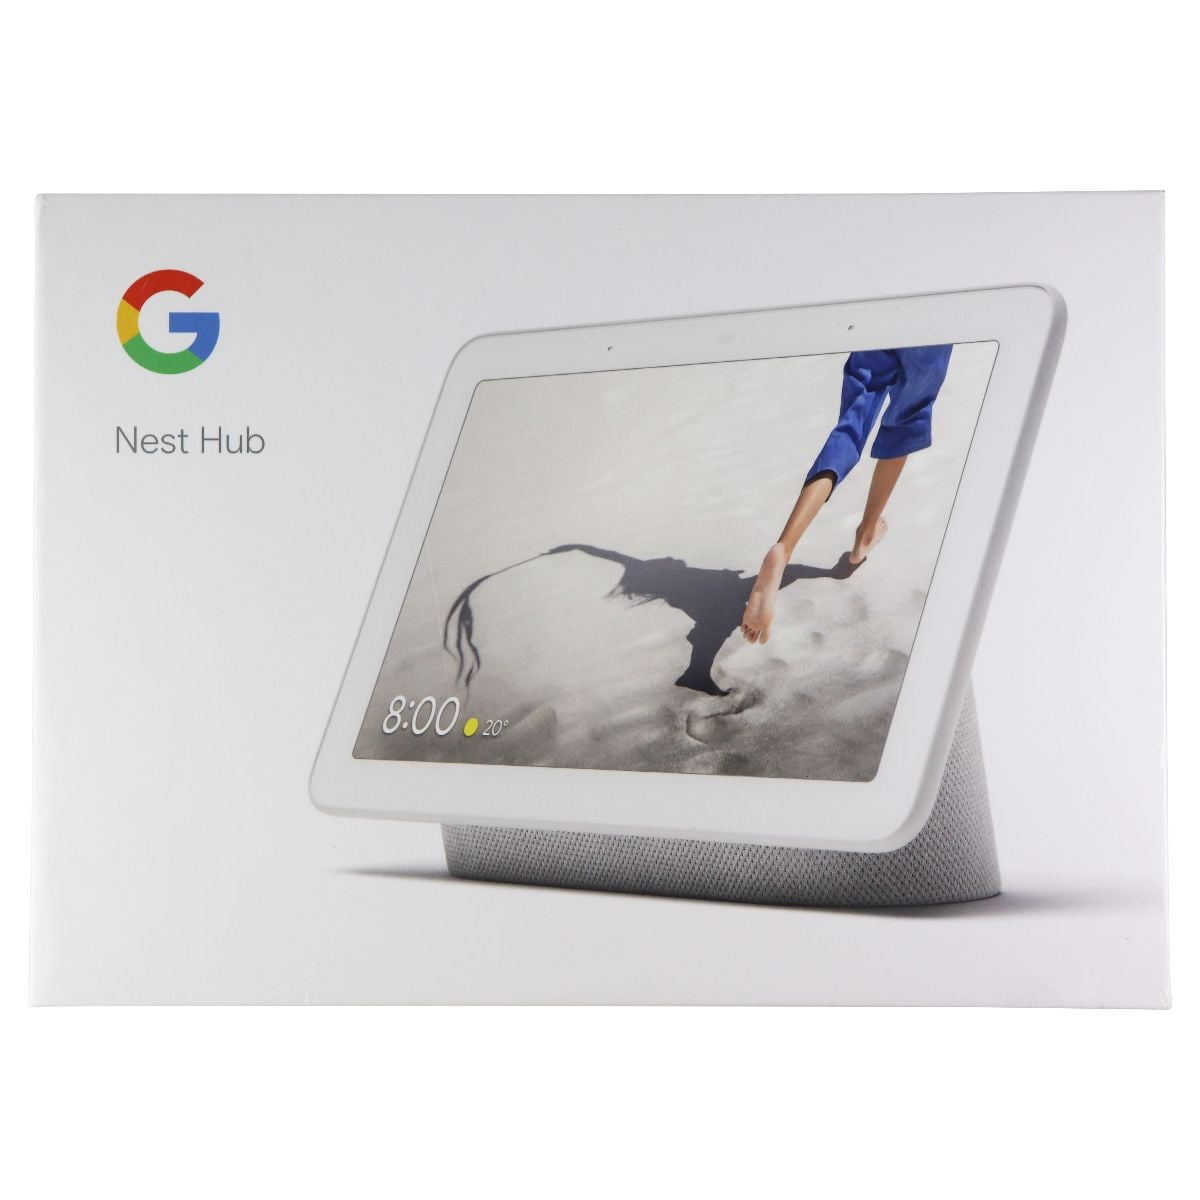 Google Nest Hub Max specifications